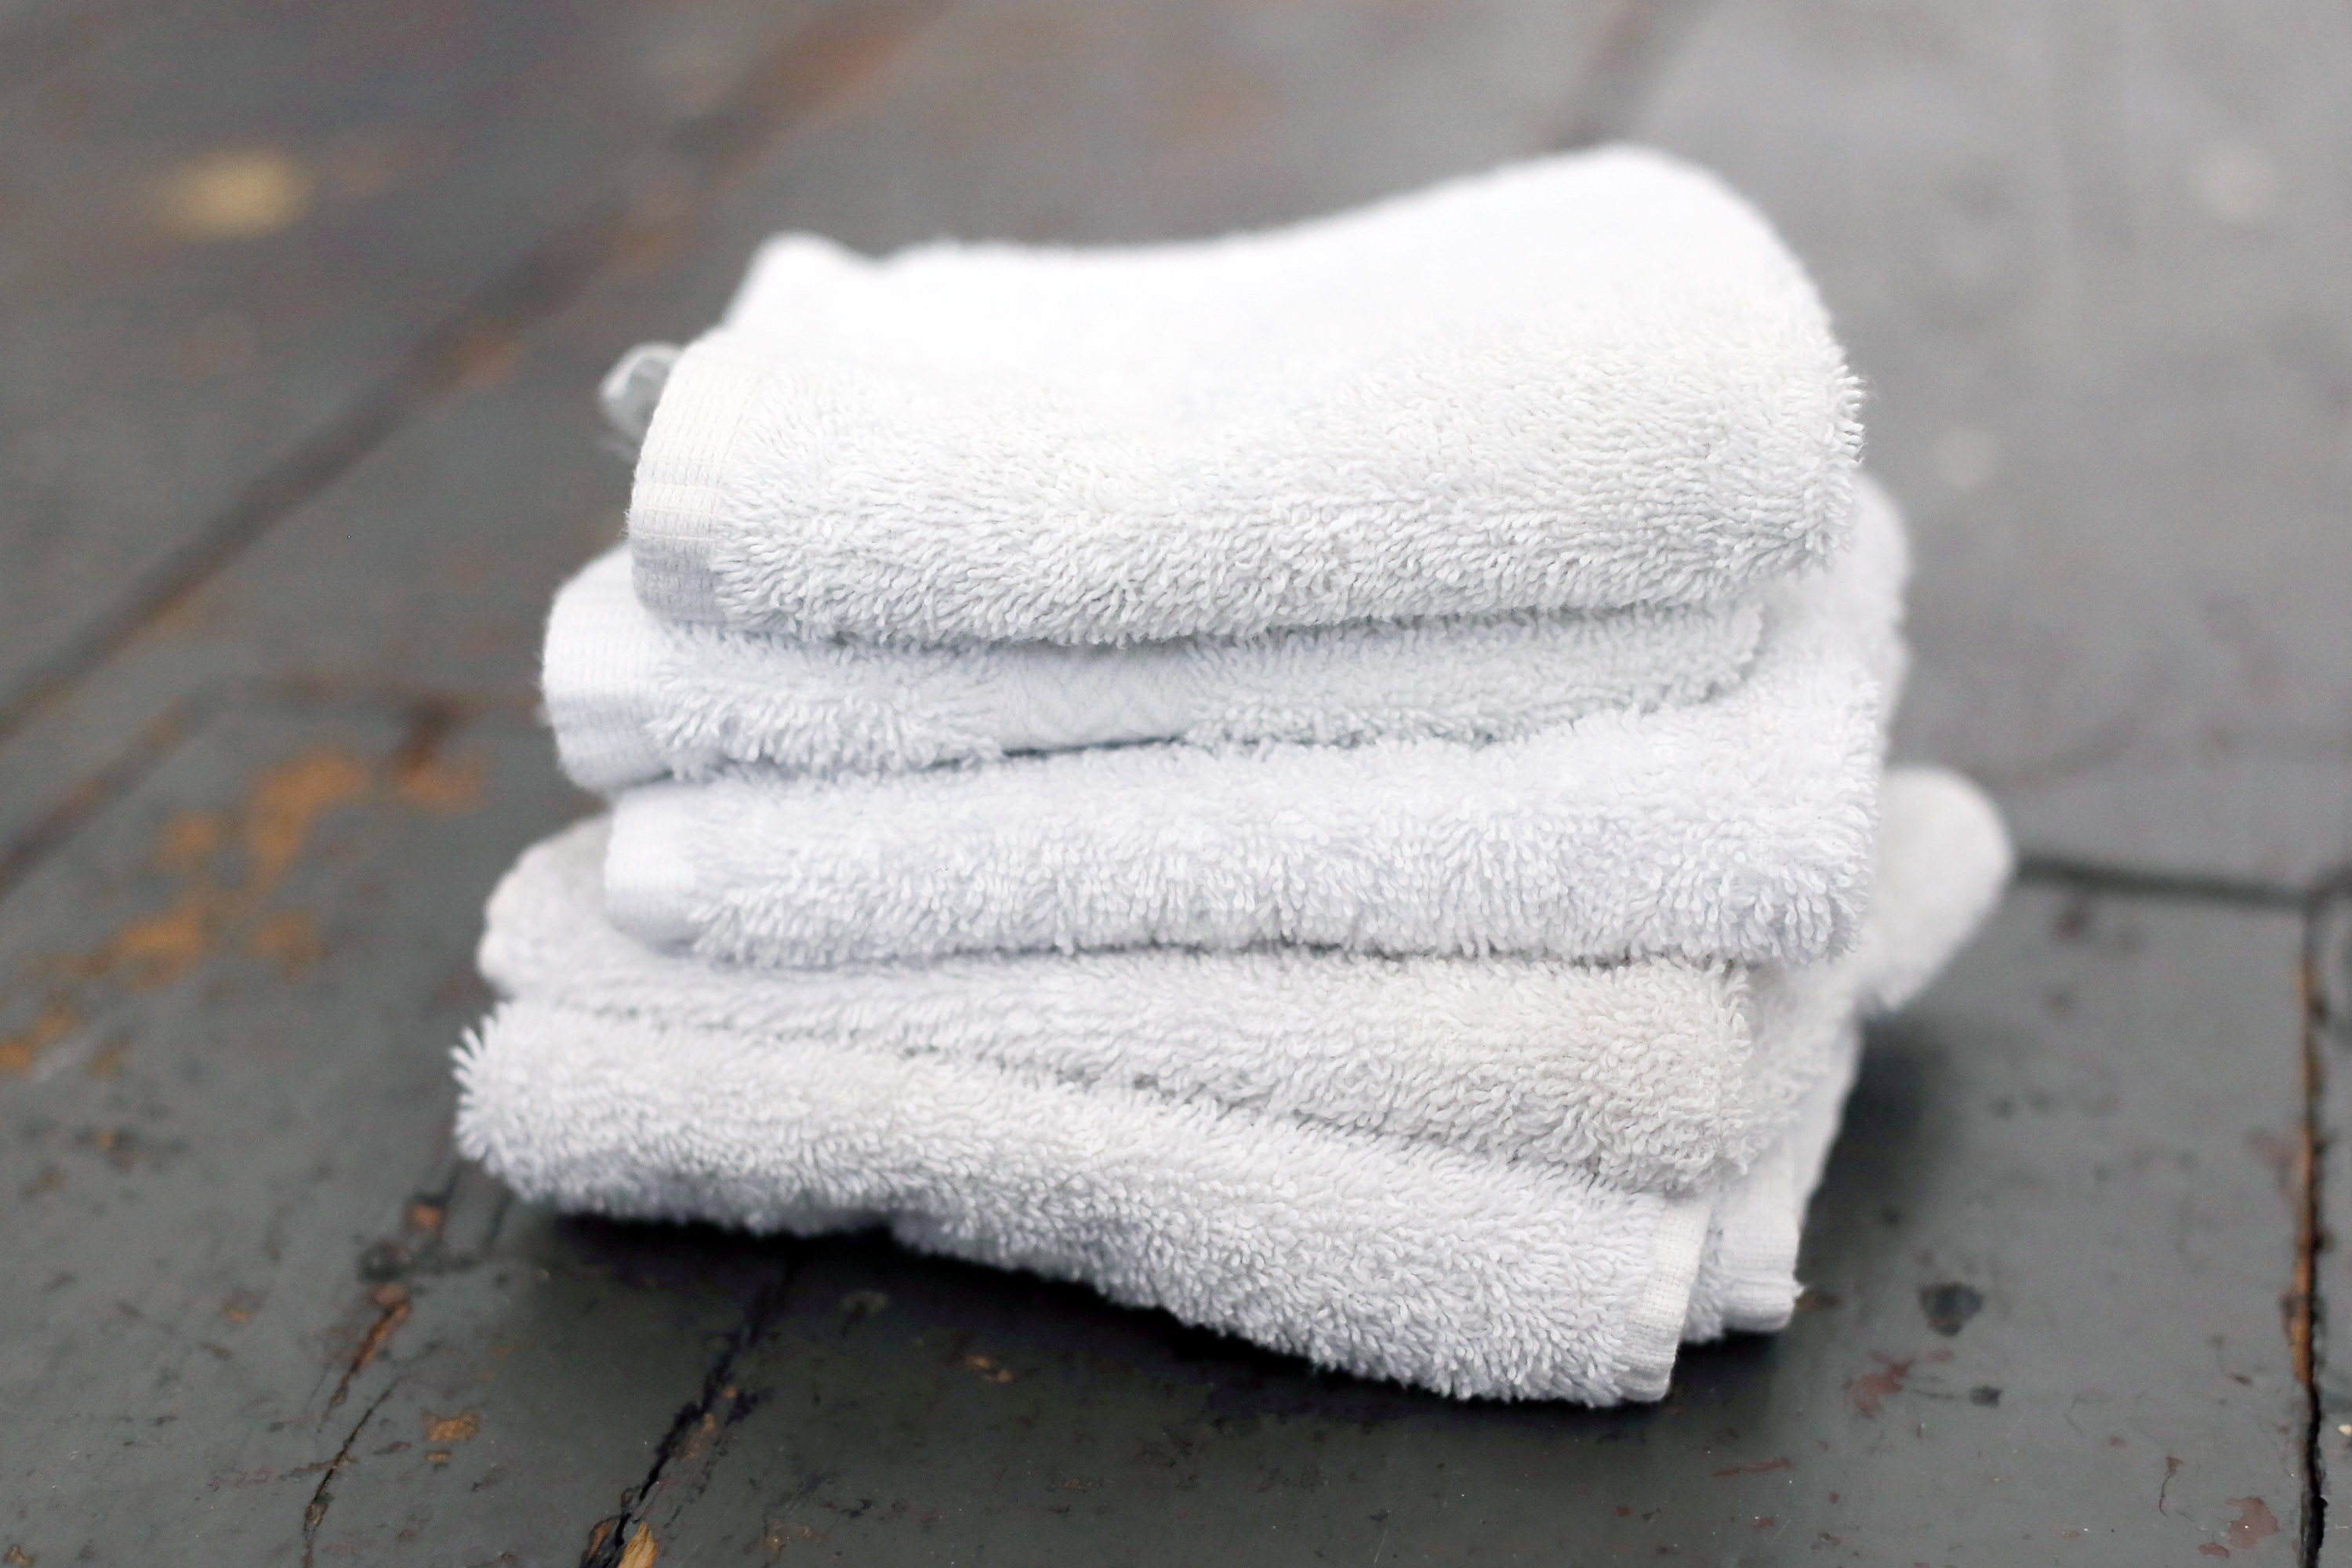 How Hotels Keep Towels White: Tips and Tricks - Creative Homemaking